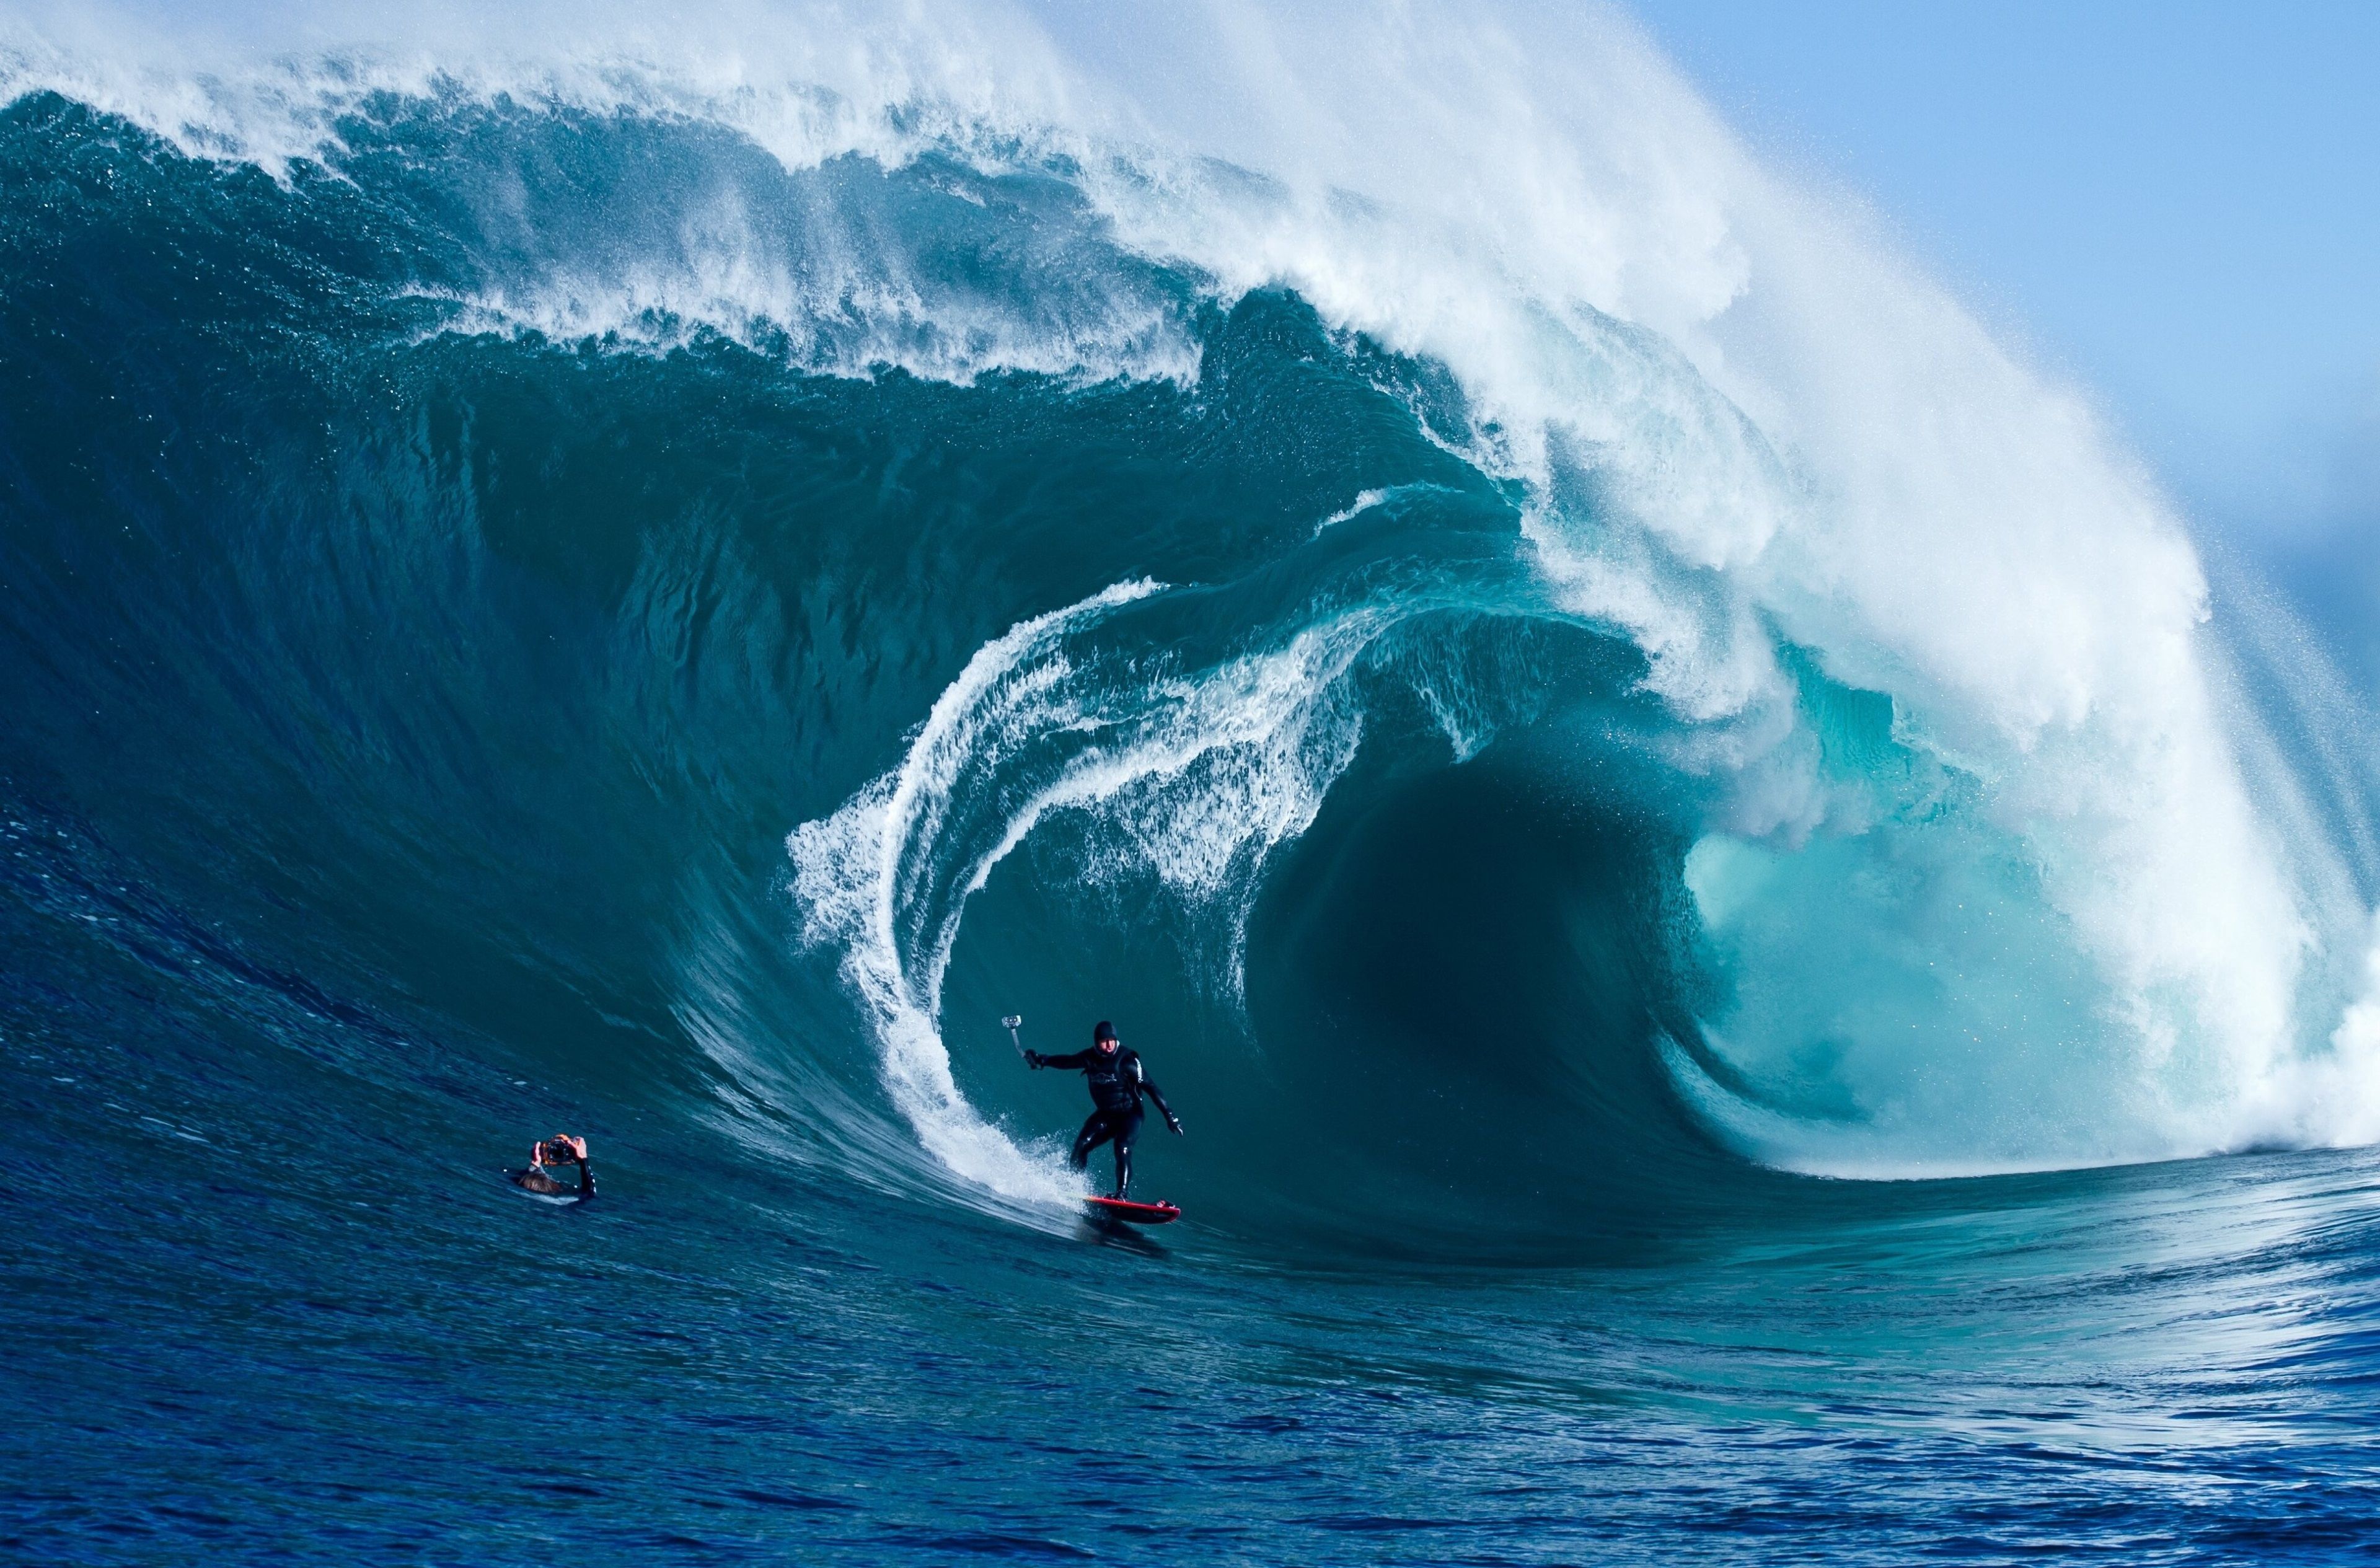 surfing 4k free download of desktop wallpaper. Surfing wallpaper, Surfing image, Waves